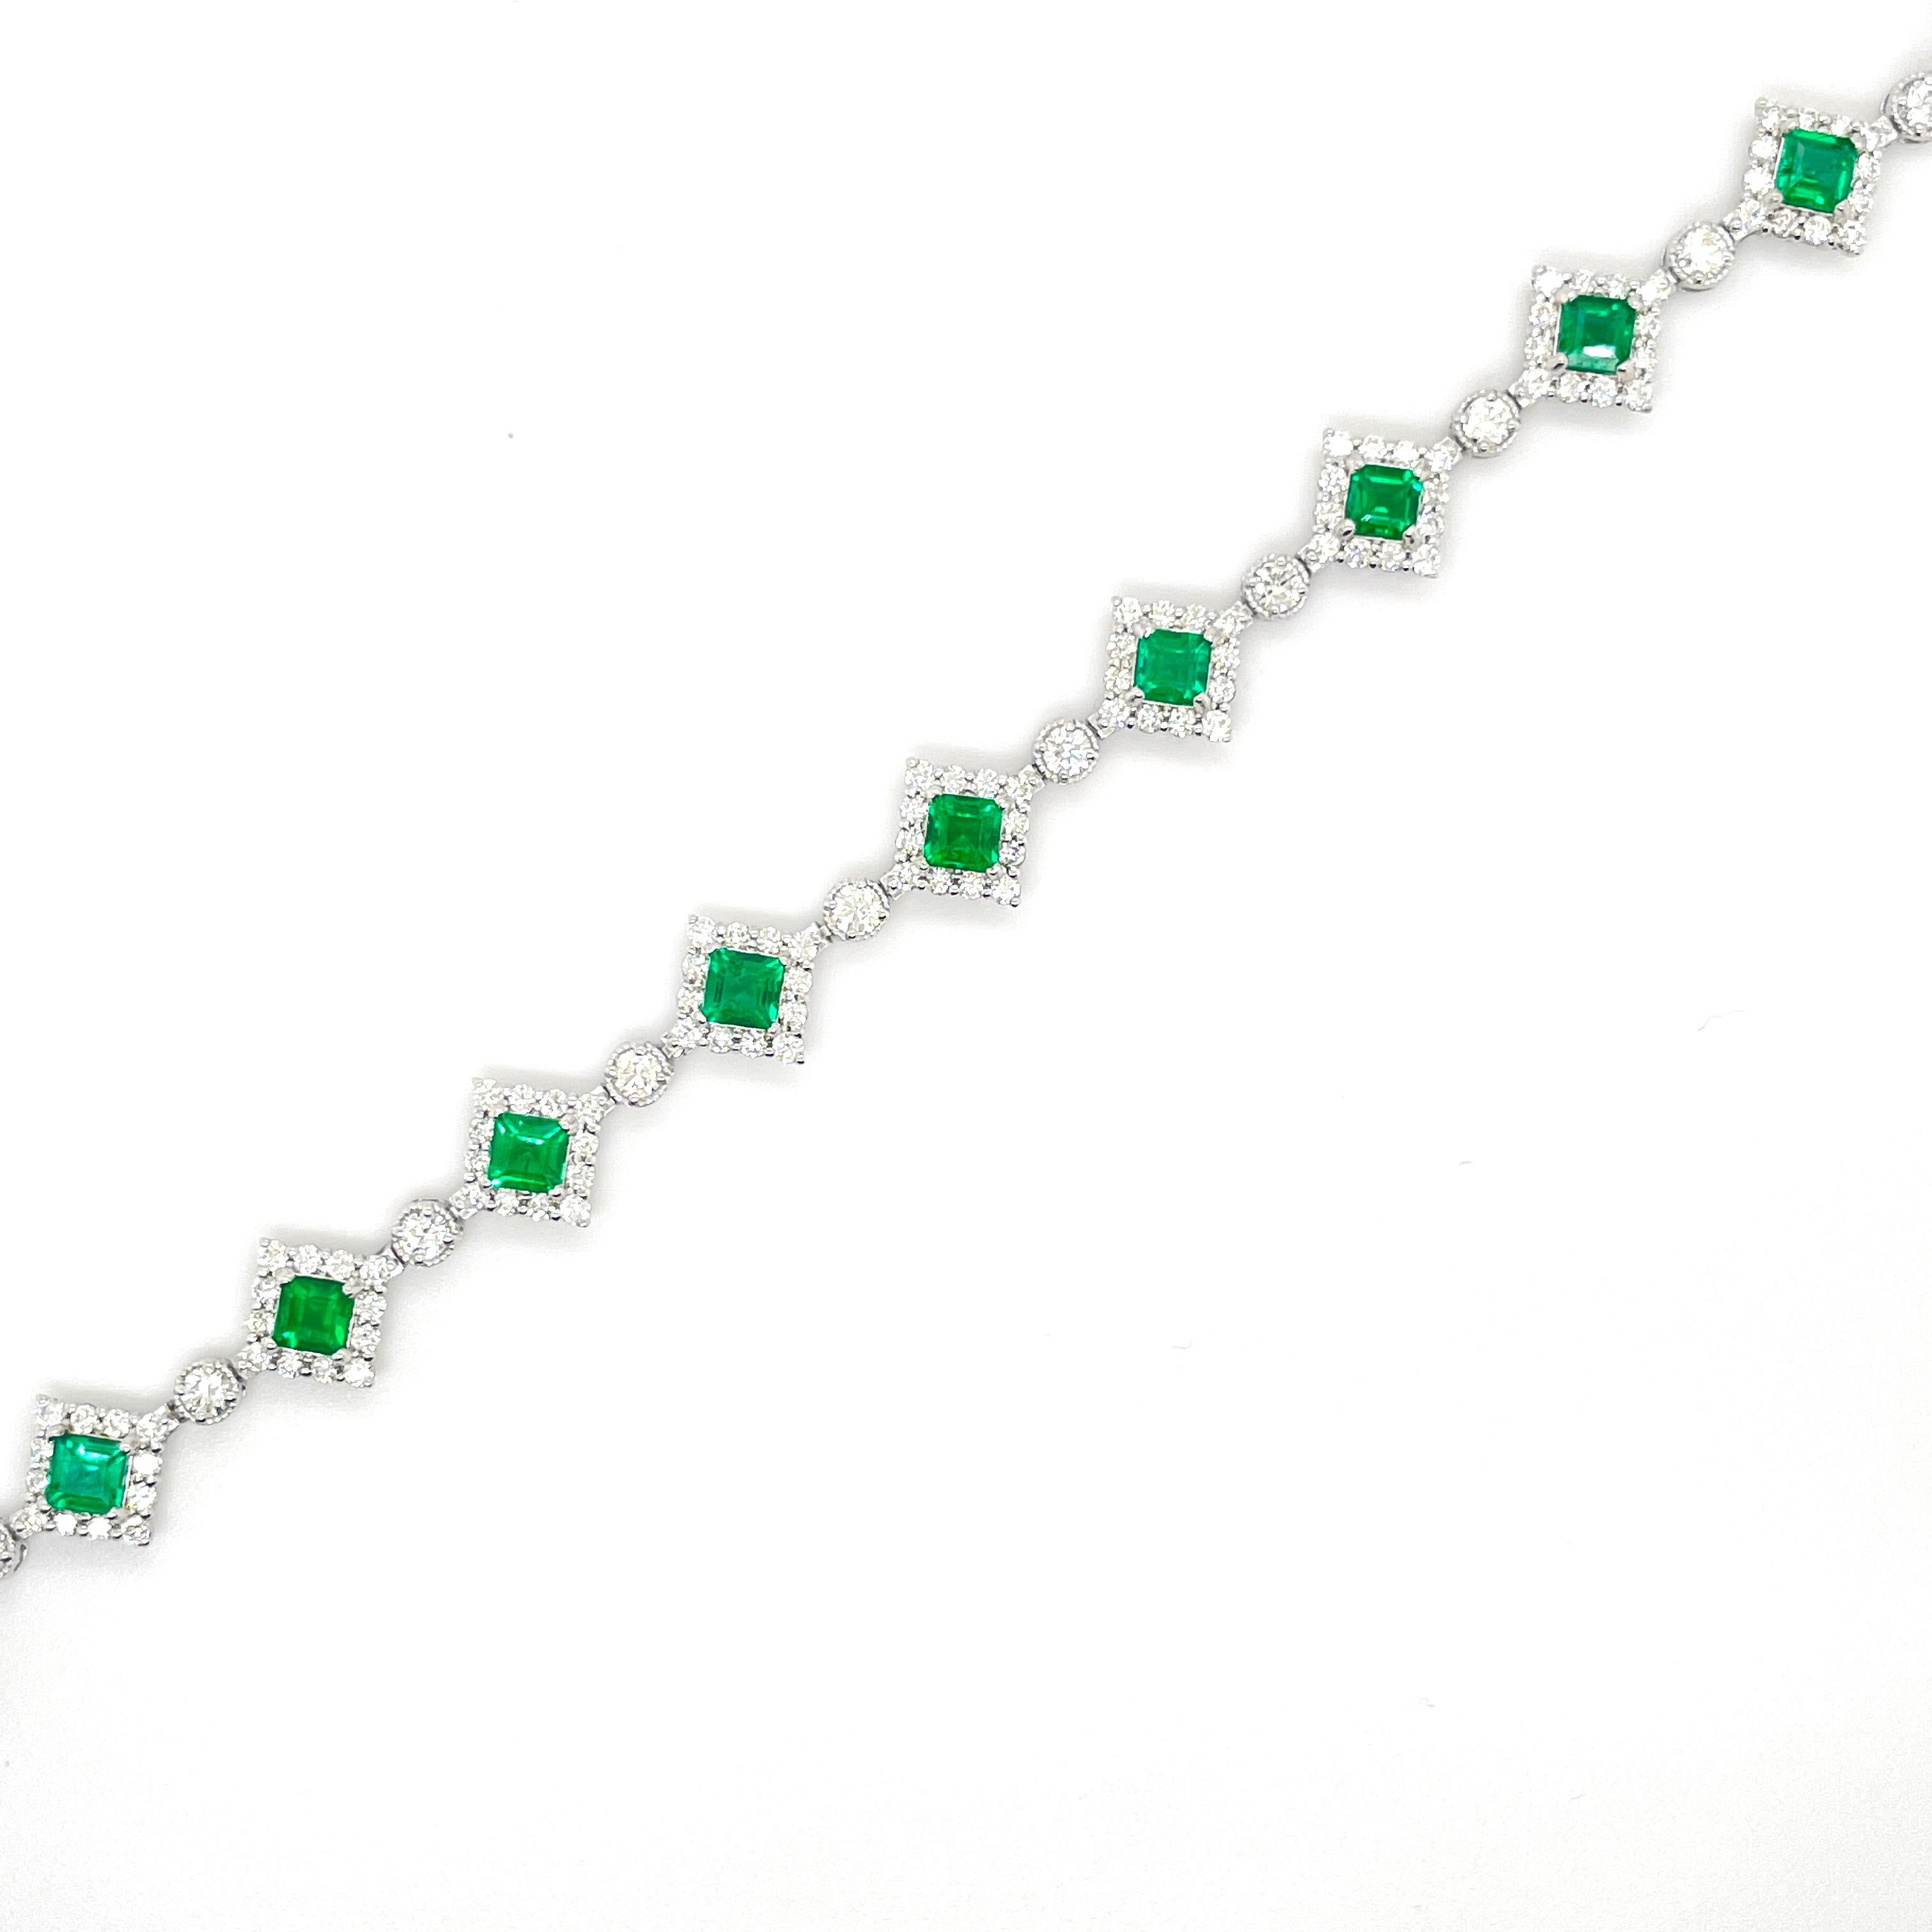 Emerald Cut 2.91 Carat Natural Emeralds and Diamonds Tennis Bracelet Set in Platinum